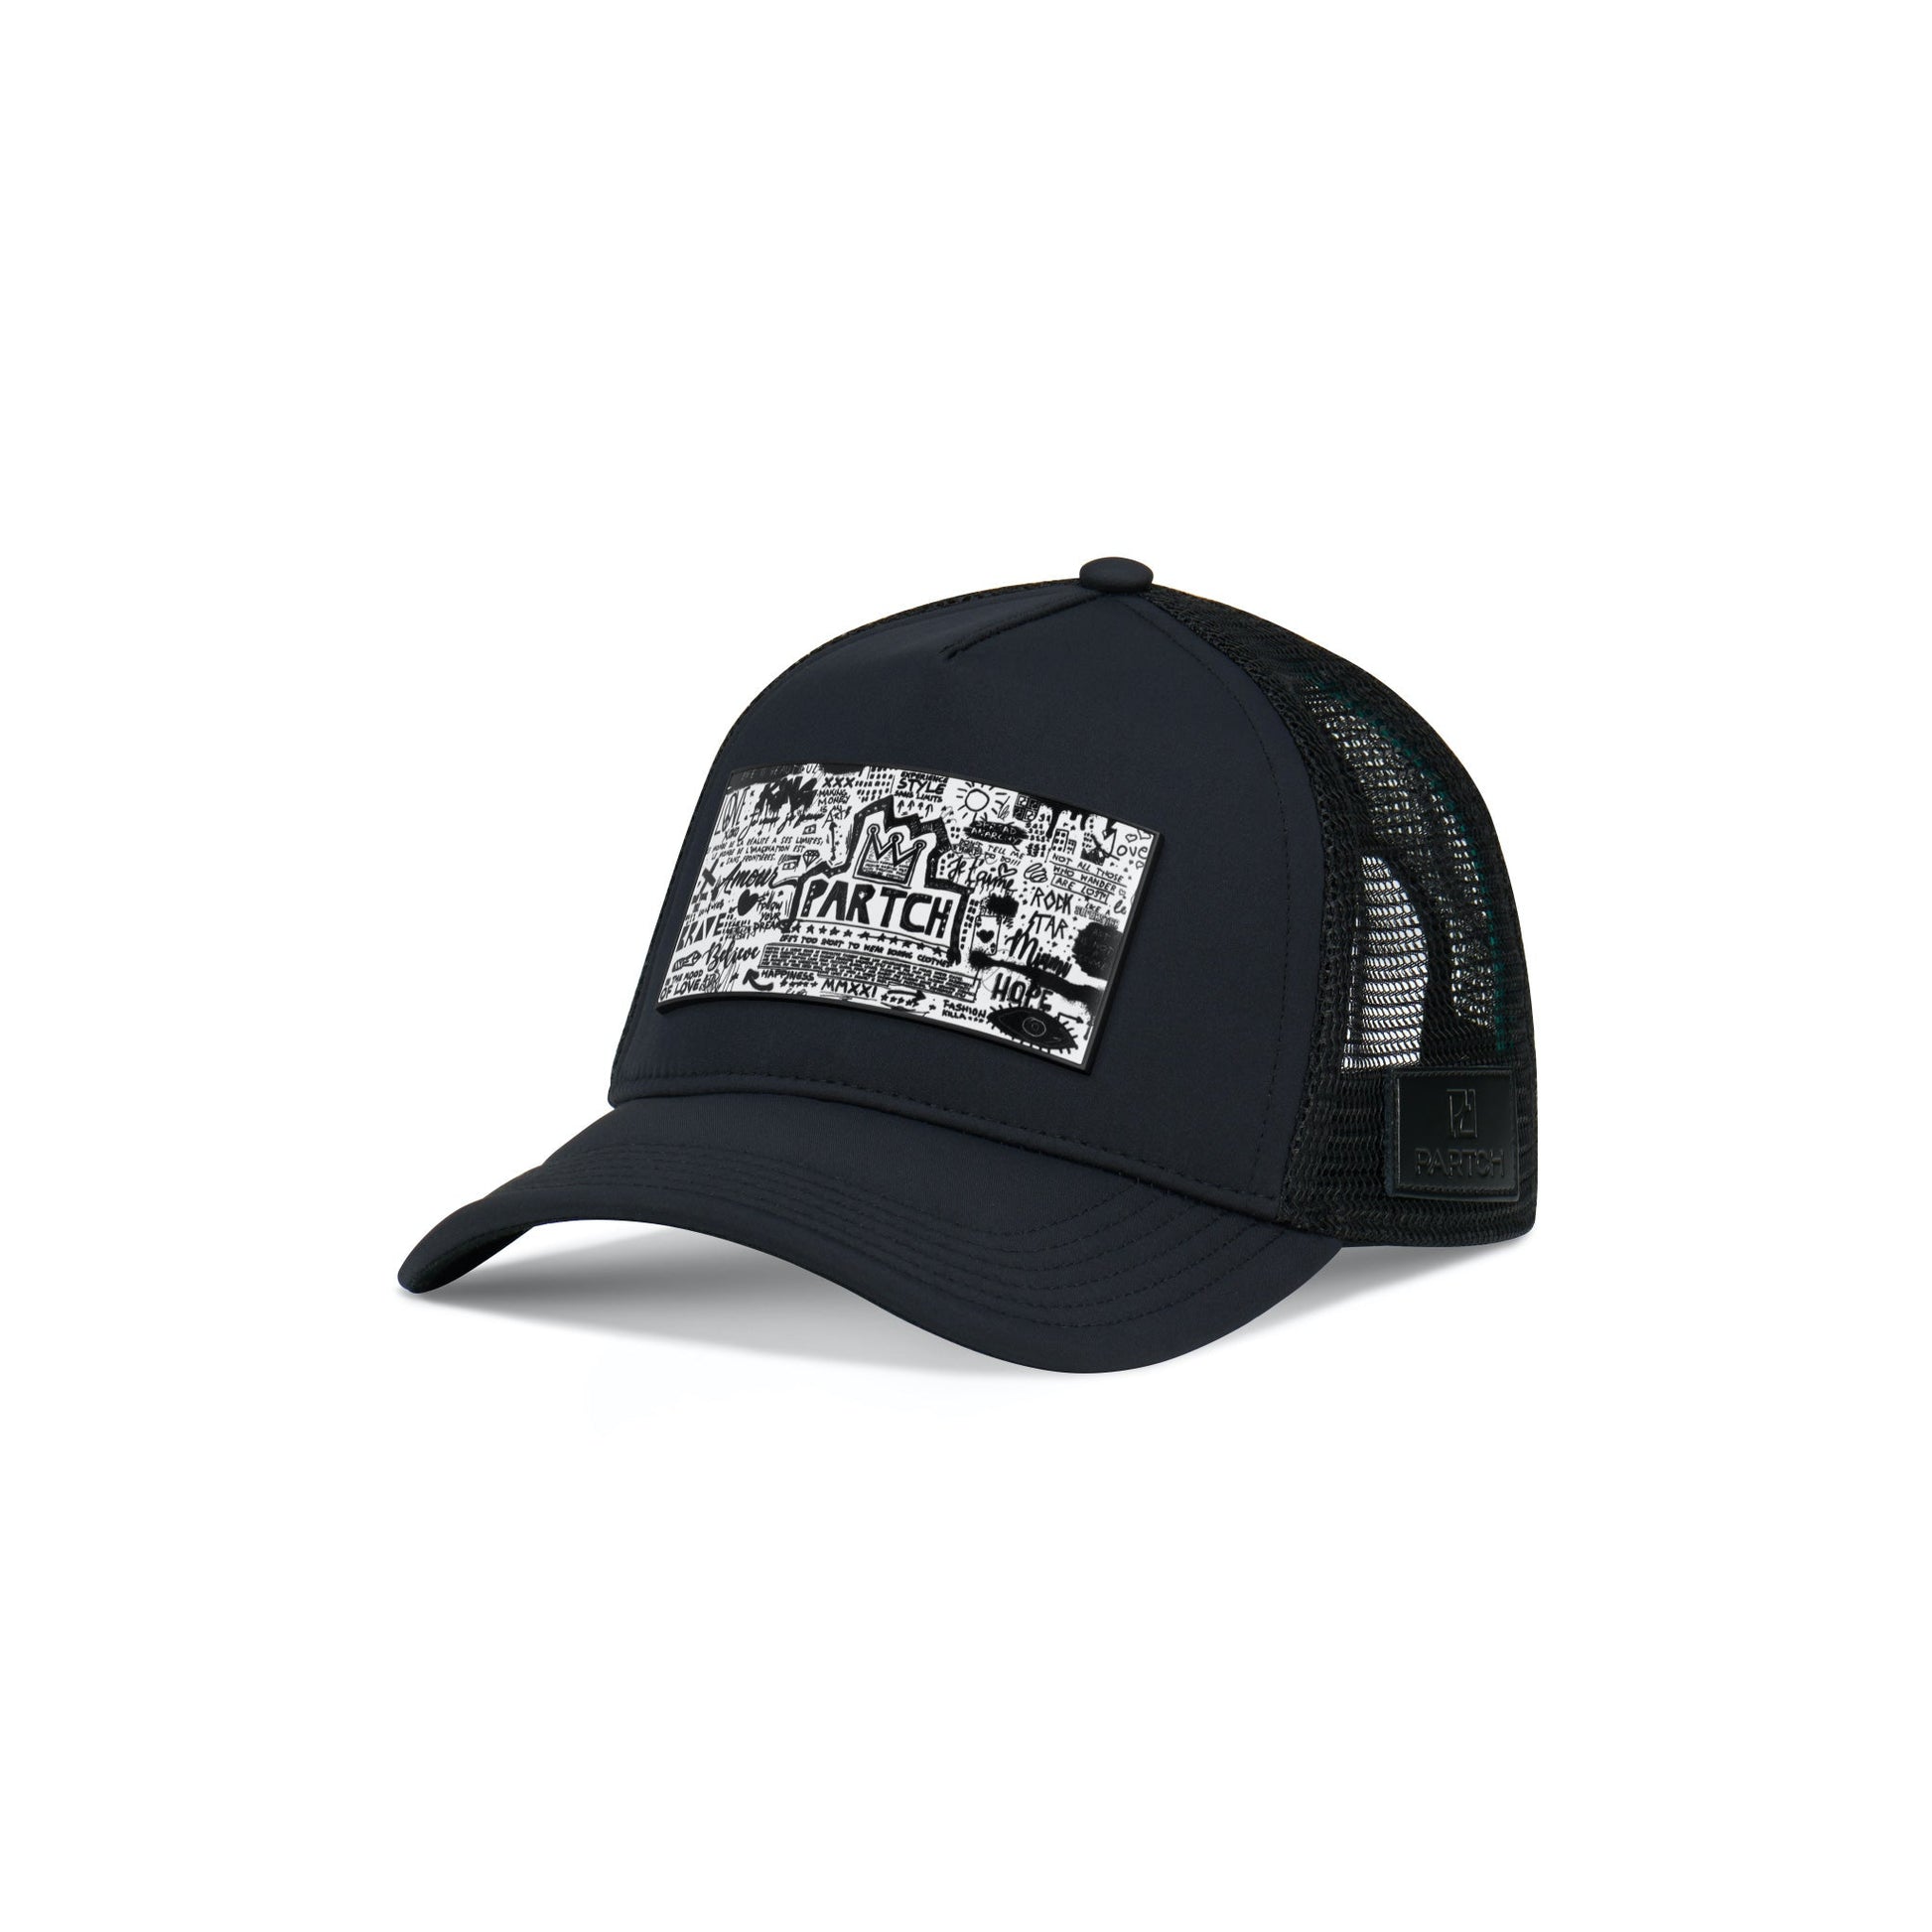 Partch Trucker Hat Black with PARTCH-Clip Pop Love Front View